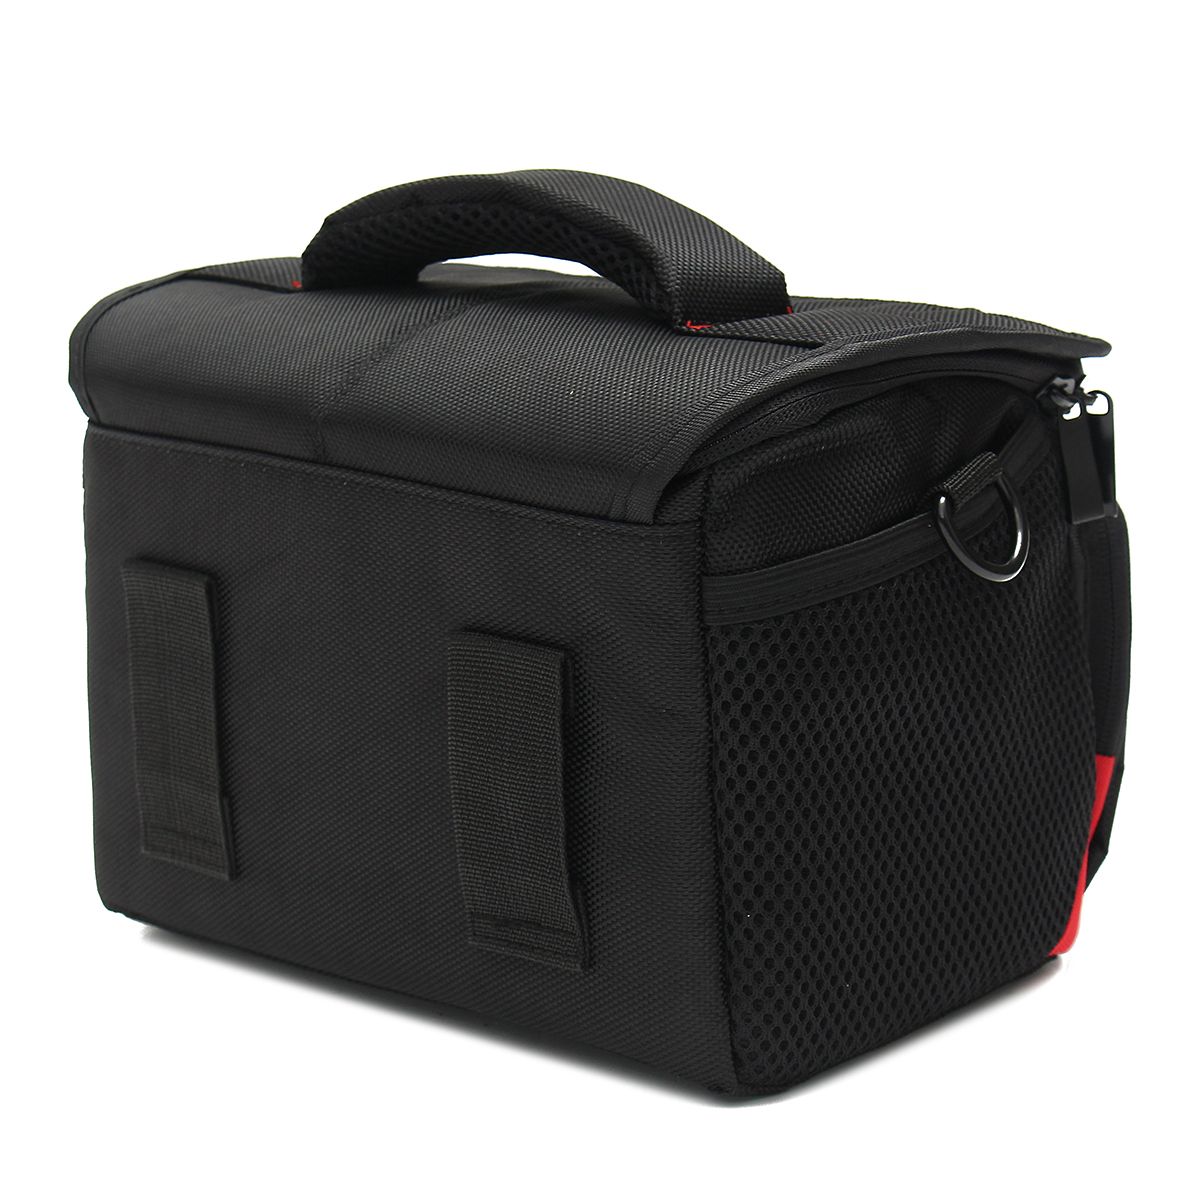 Waterproof-Camera-Shoulder-Bag-Travel-Carrying-Case-with-Rain-Cover-For-DSLR-SLR-Camera-Flash-Lens-1633799